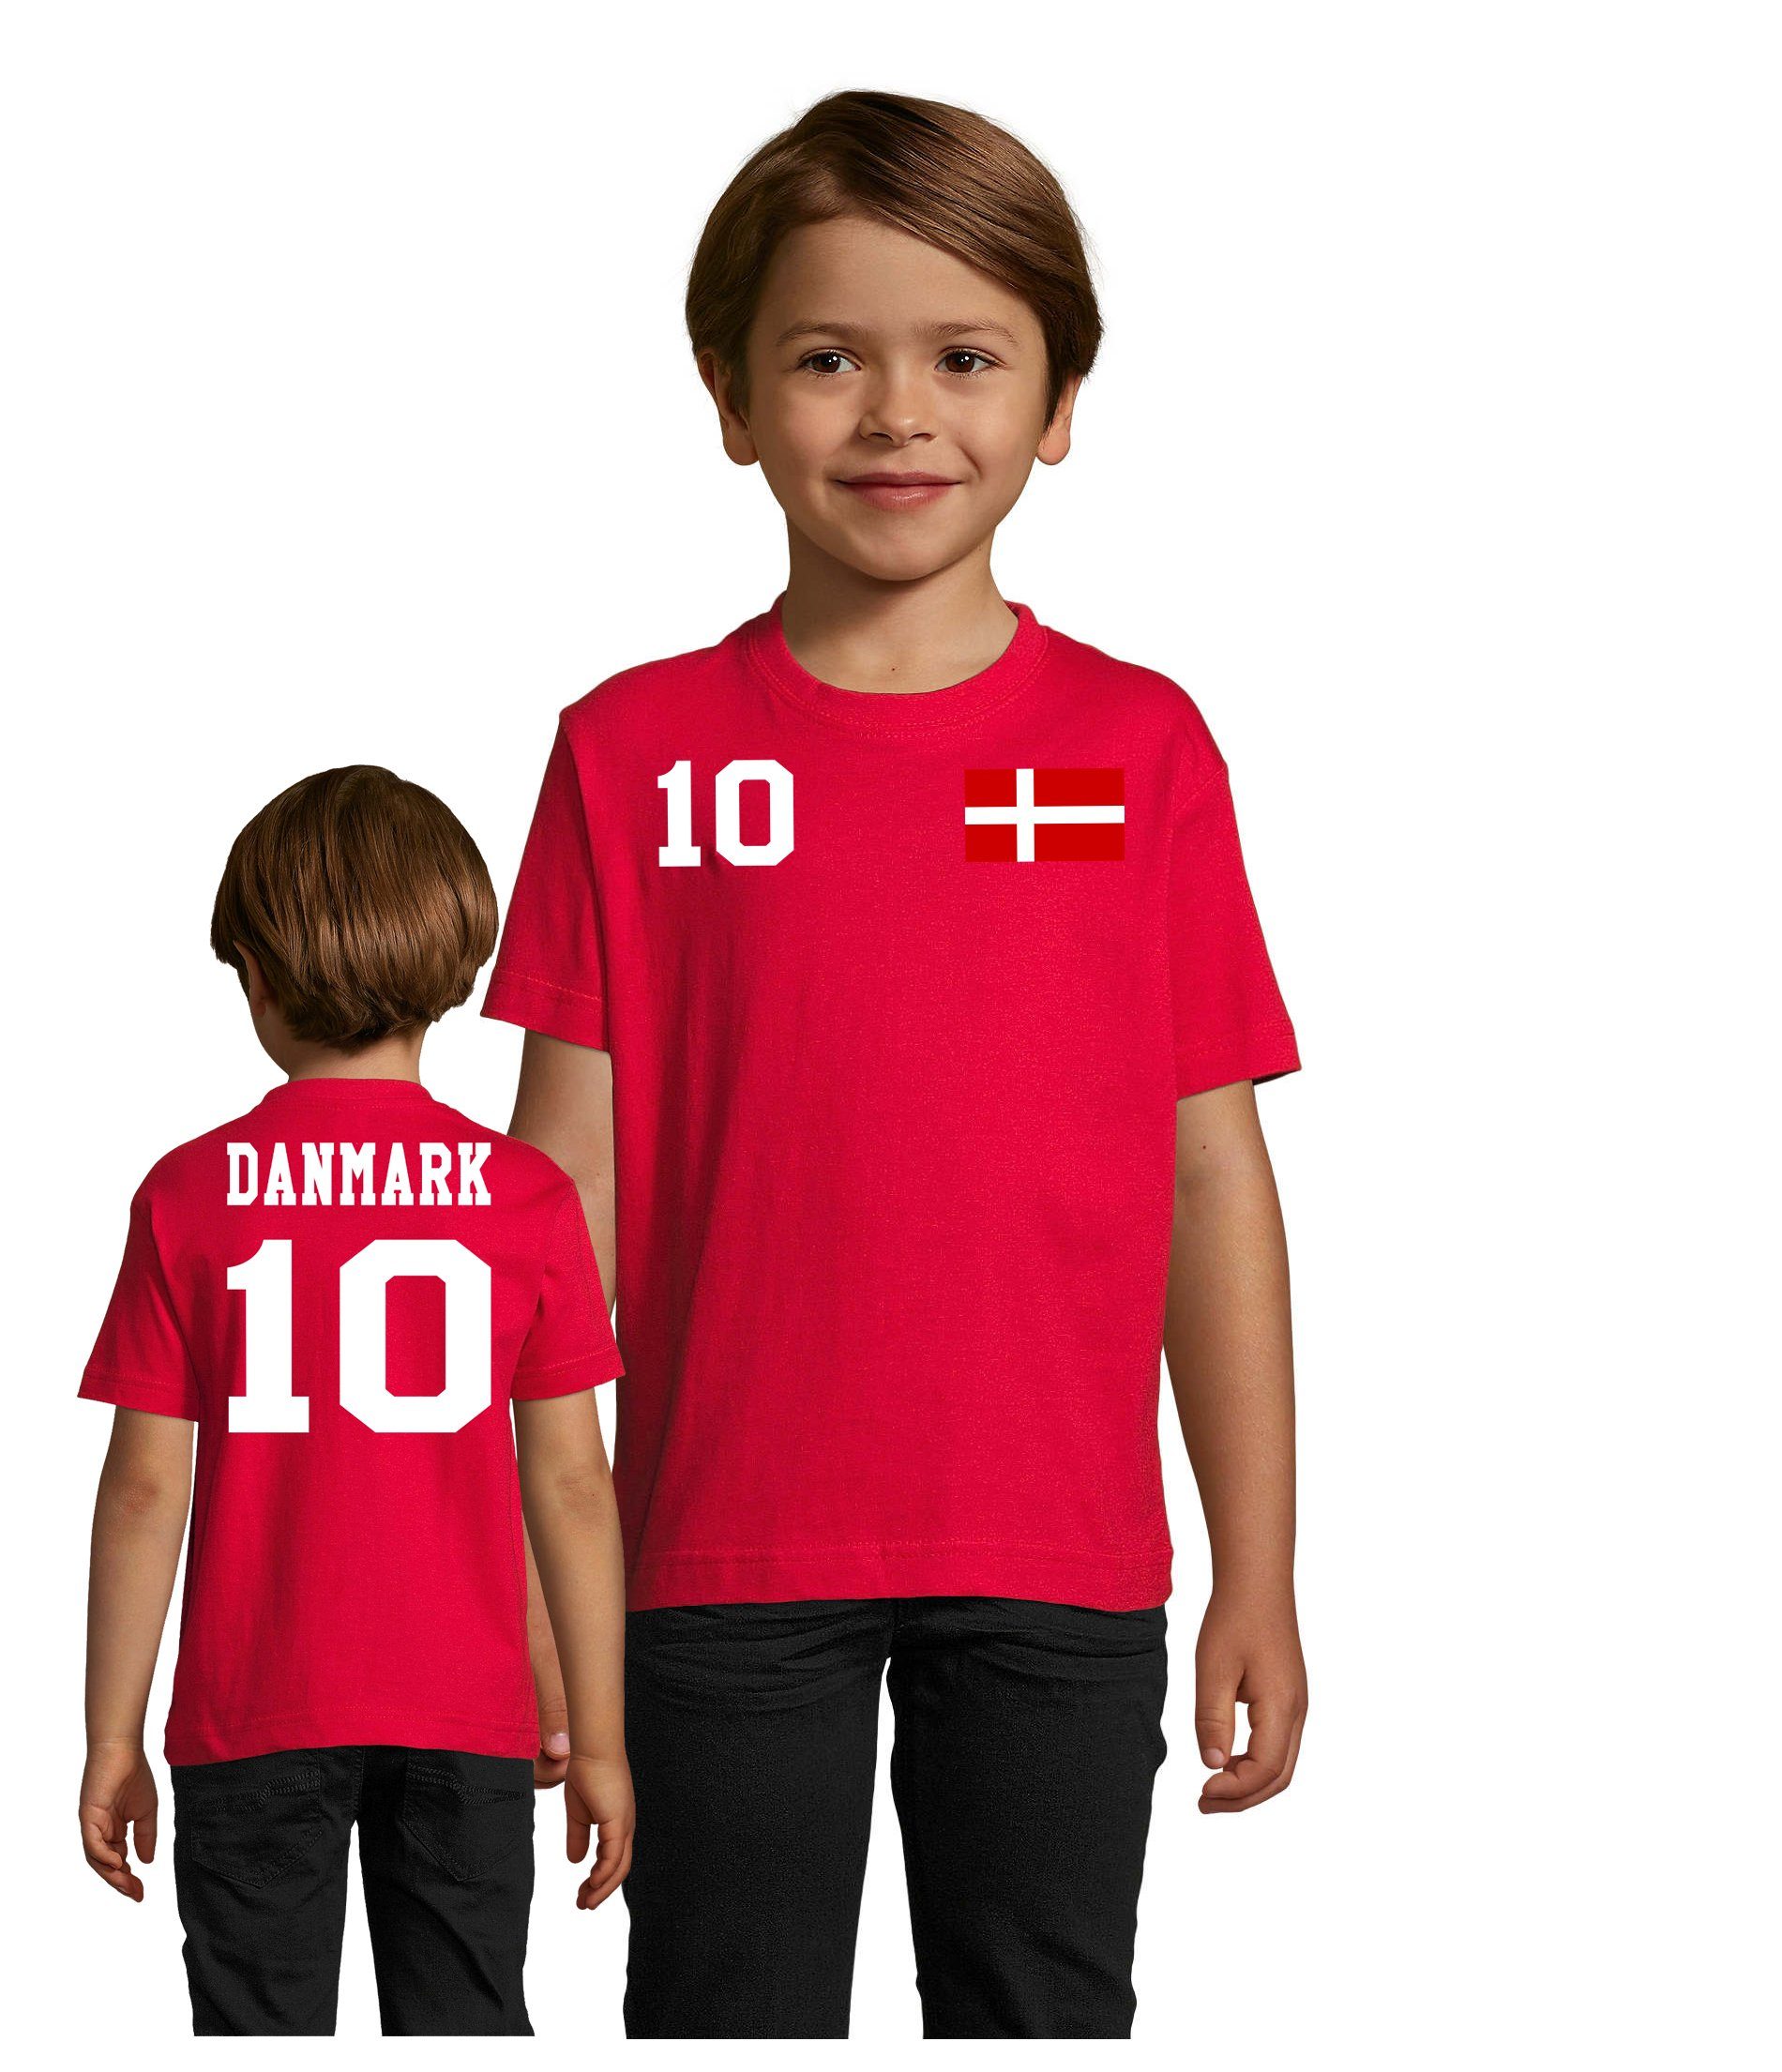 Blondie & Brownie T-Shirt Kinder Dänemark Denmark Sport Trikot Fußball Weltmeister EM